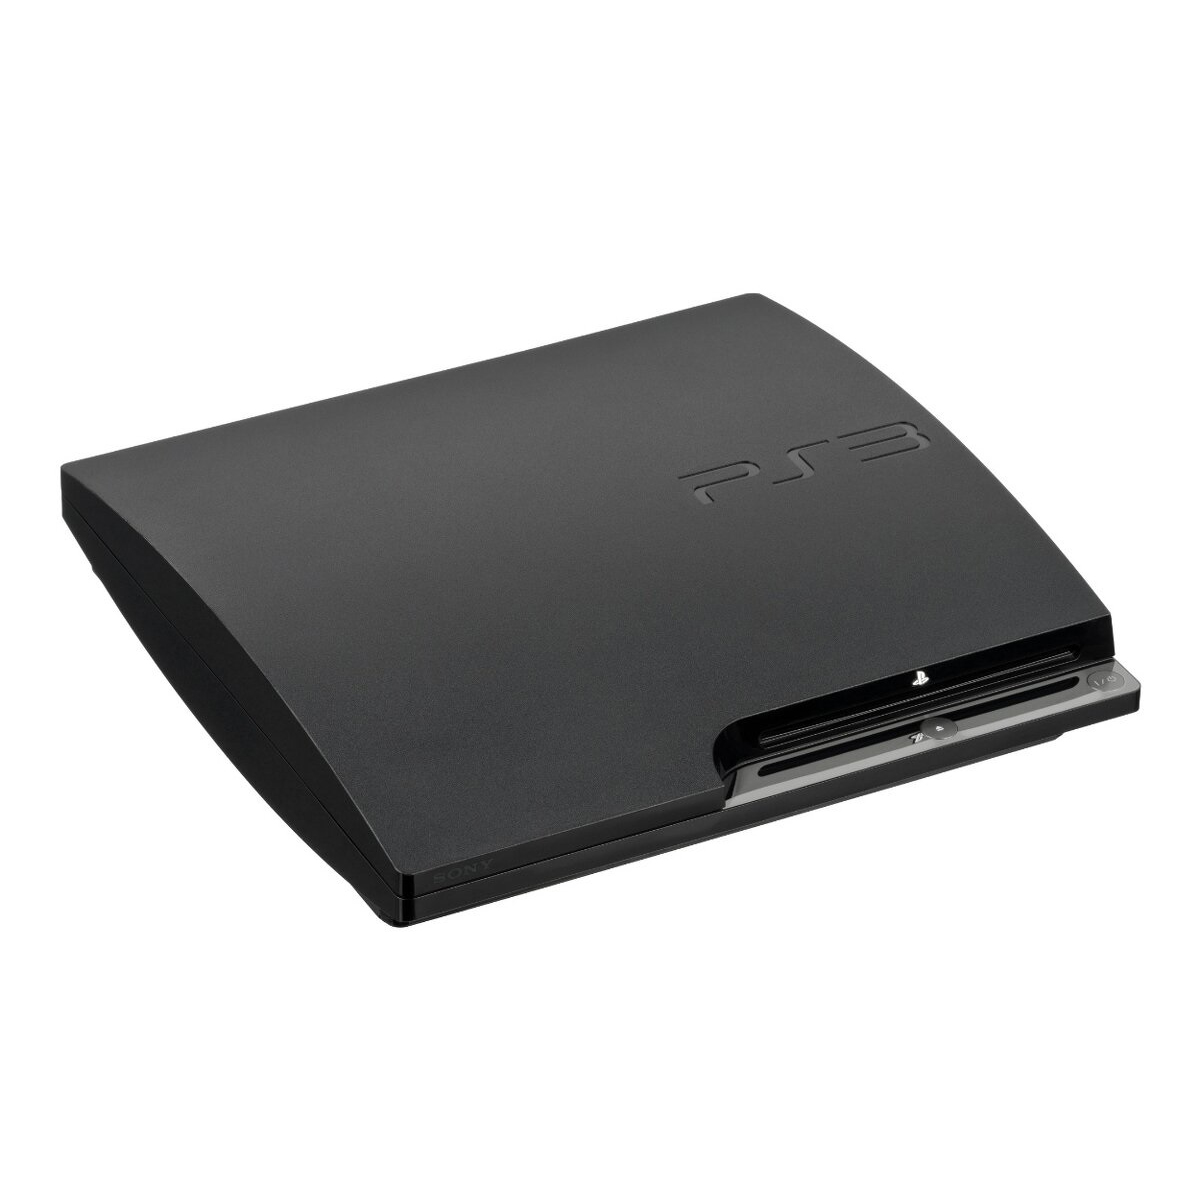 Console Playstation 3 Slim 500GB com Controle Dualshock 3 Sony Seminovo